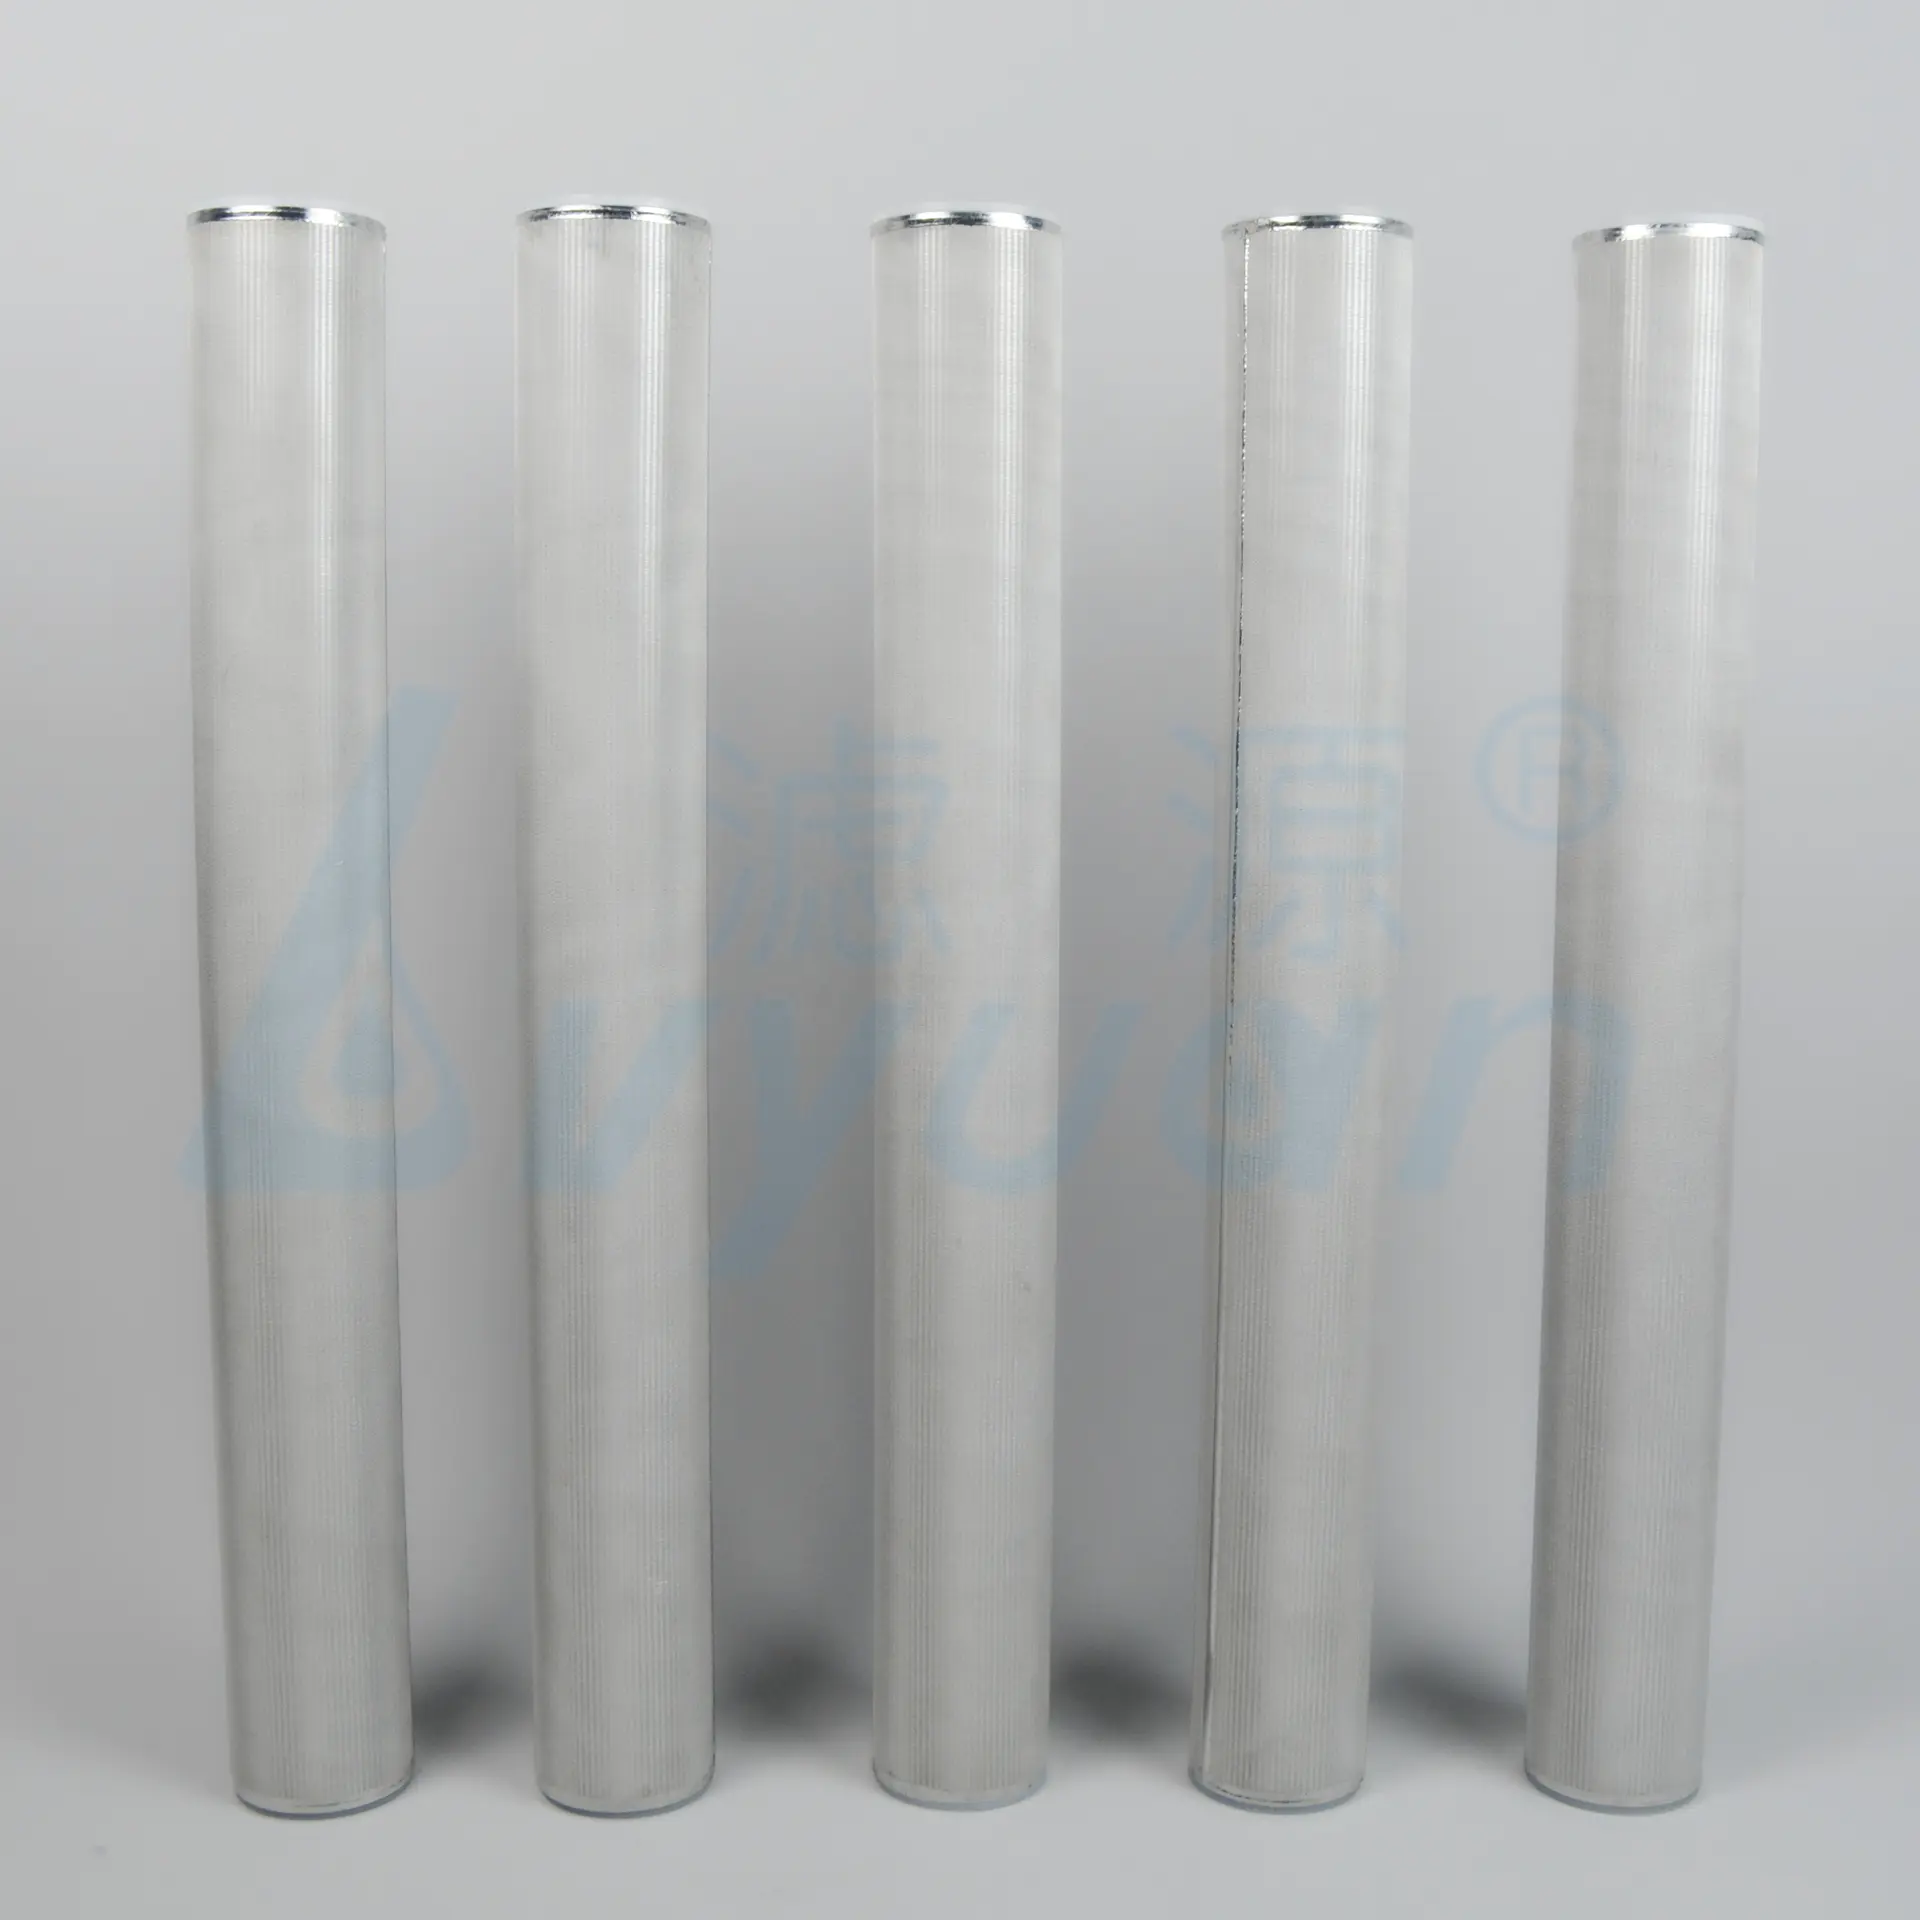 50 micron 100 micron stainless steel sintered mesh filter/porous metal filter cartridges 40 inch